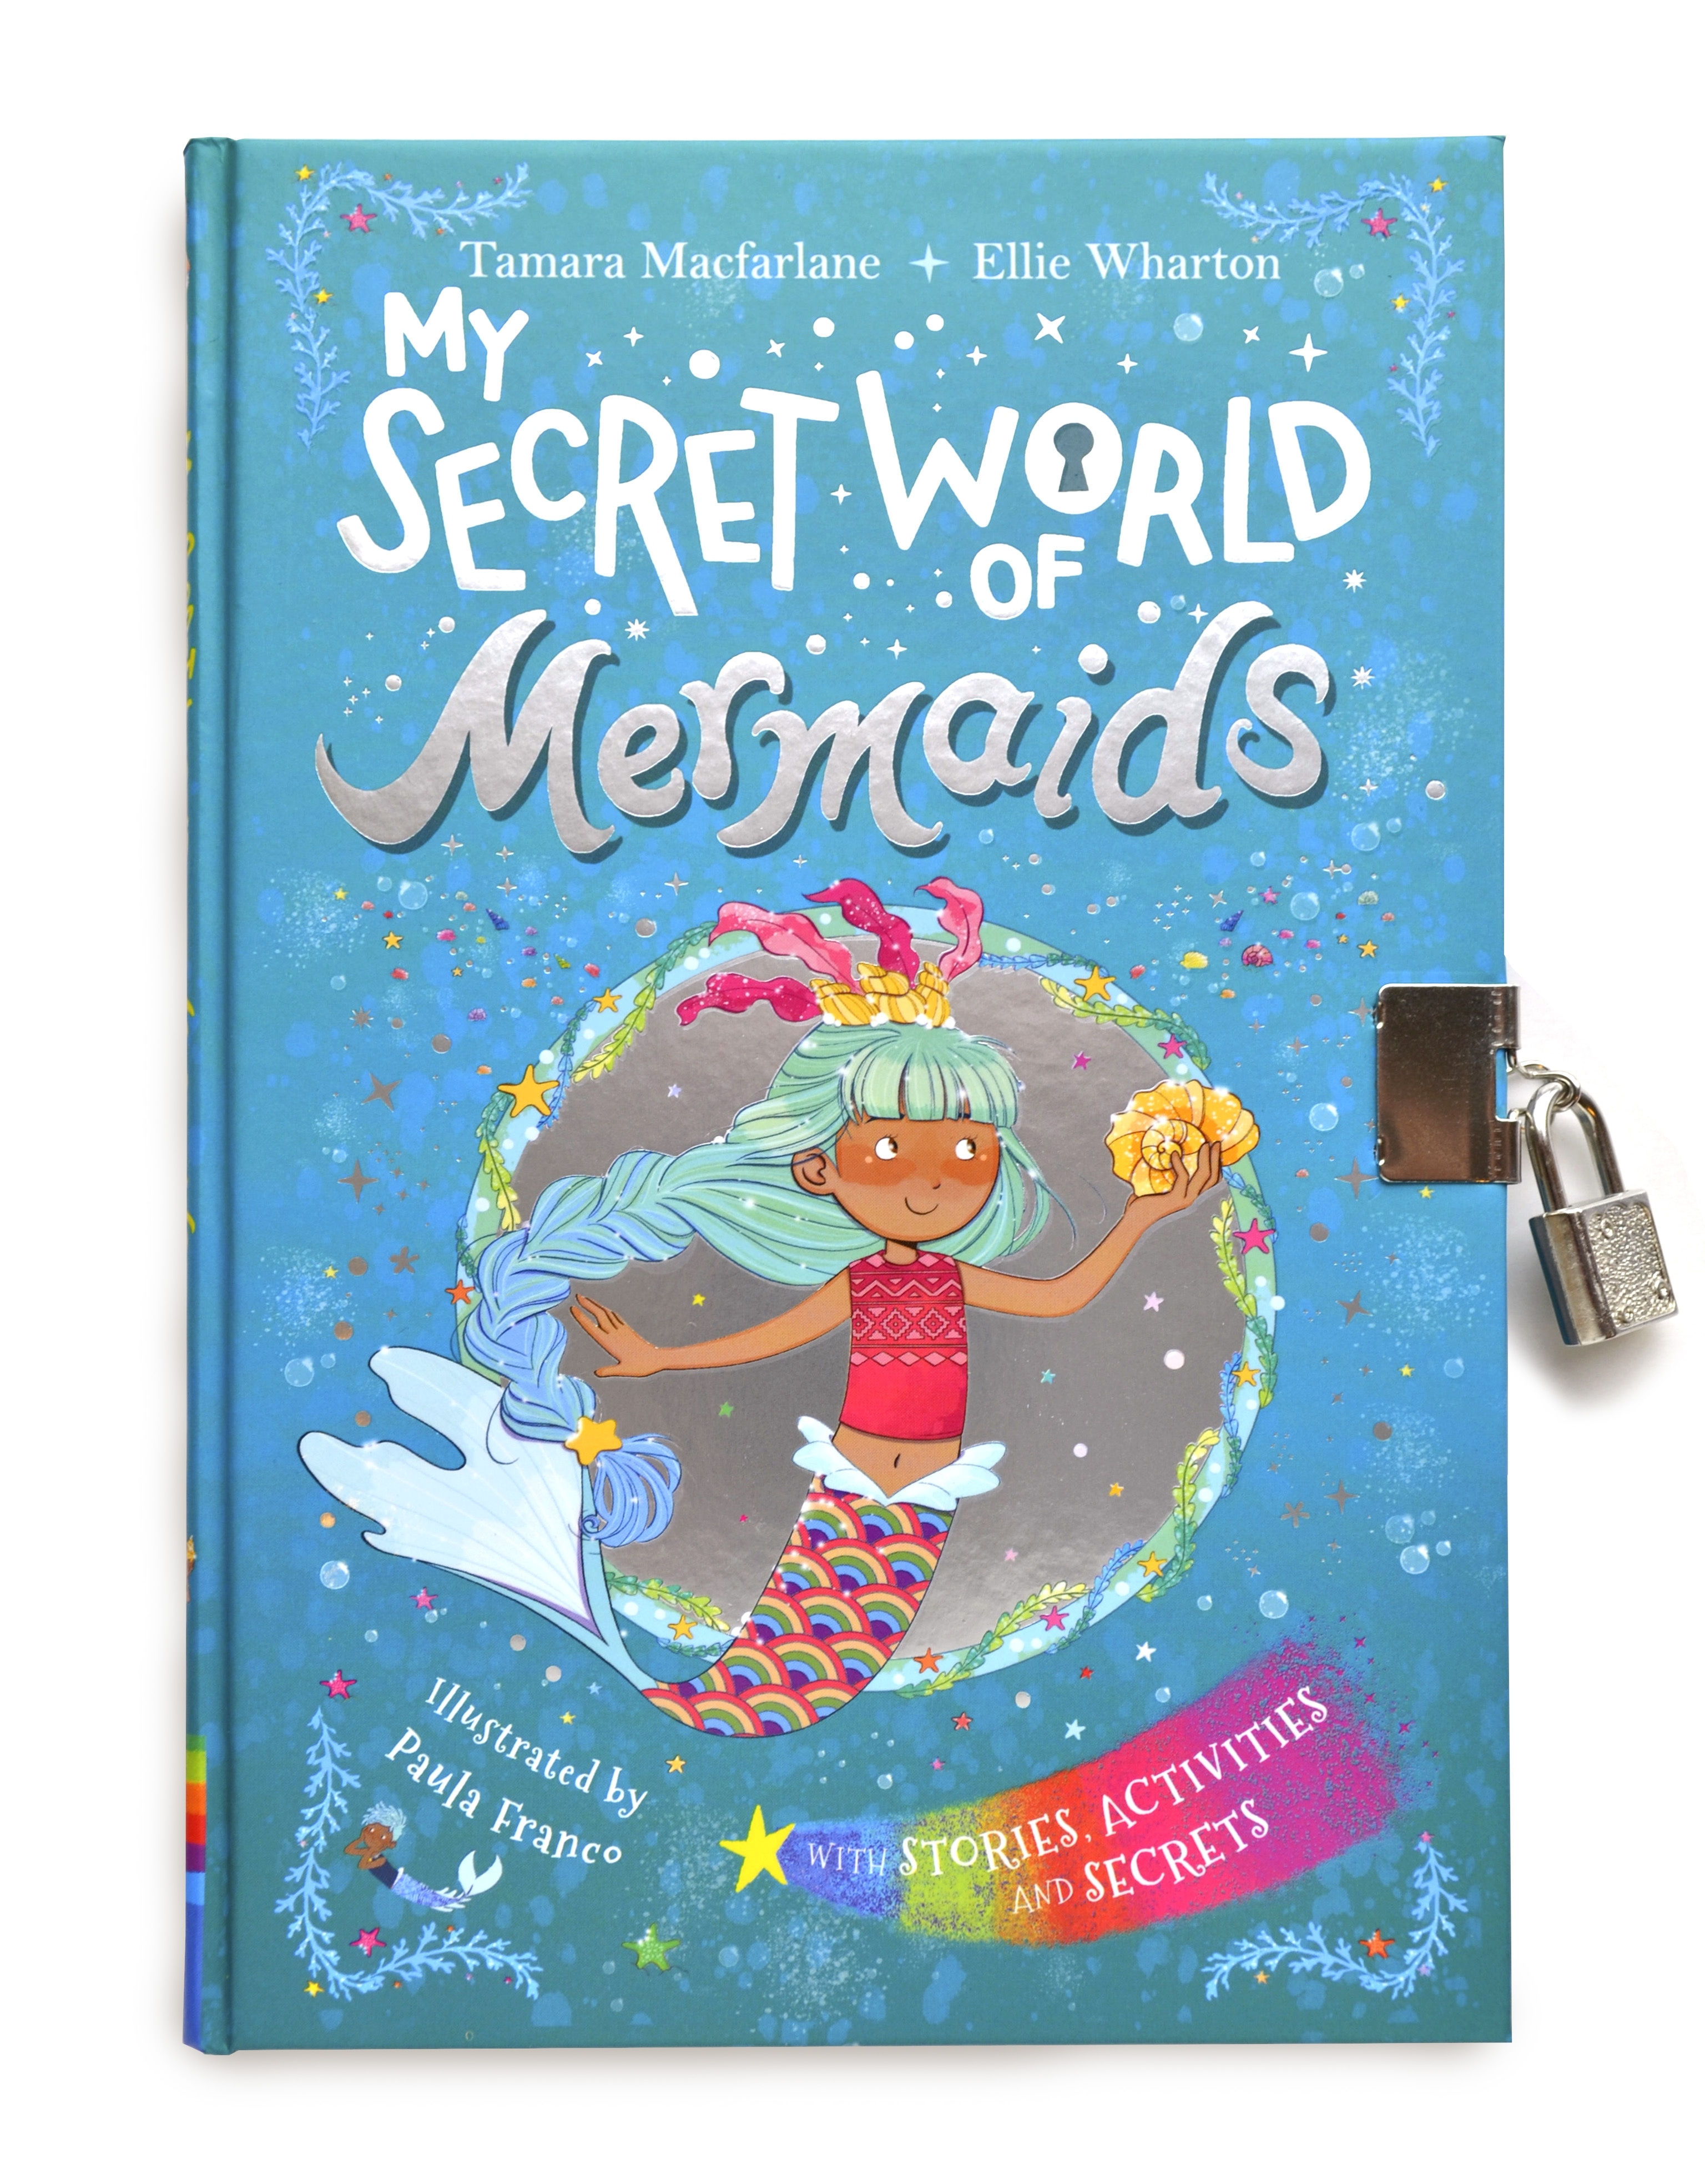 Book “My Secret World of Mermaids” by Ellie Wharton — October 3, 2019